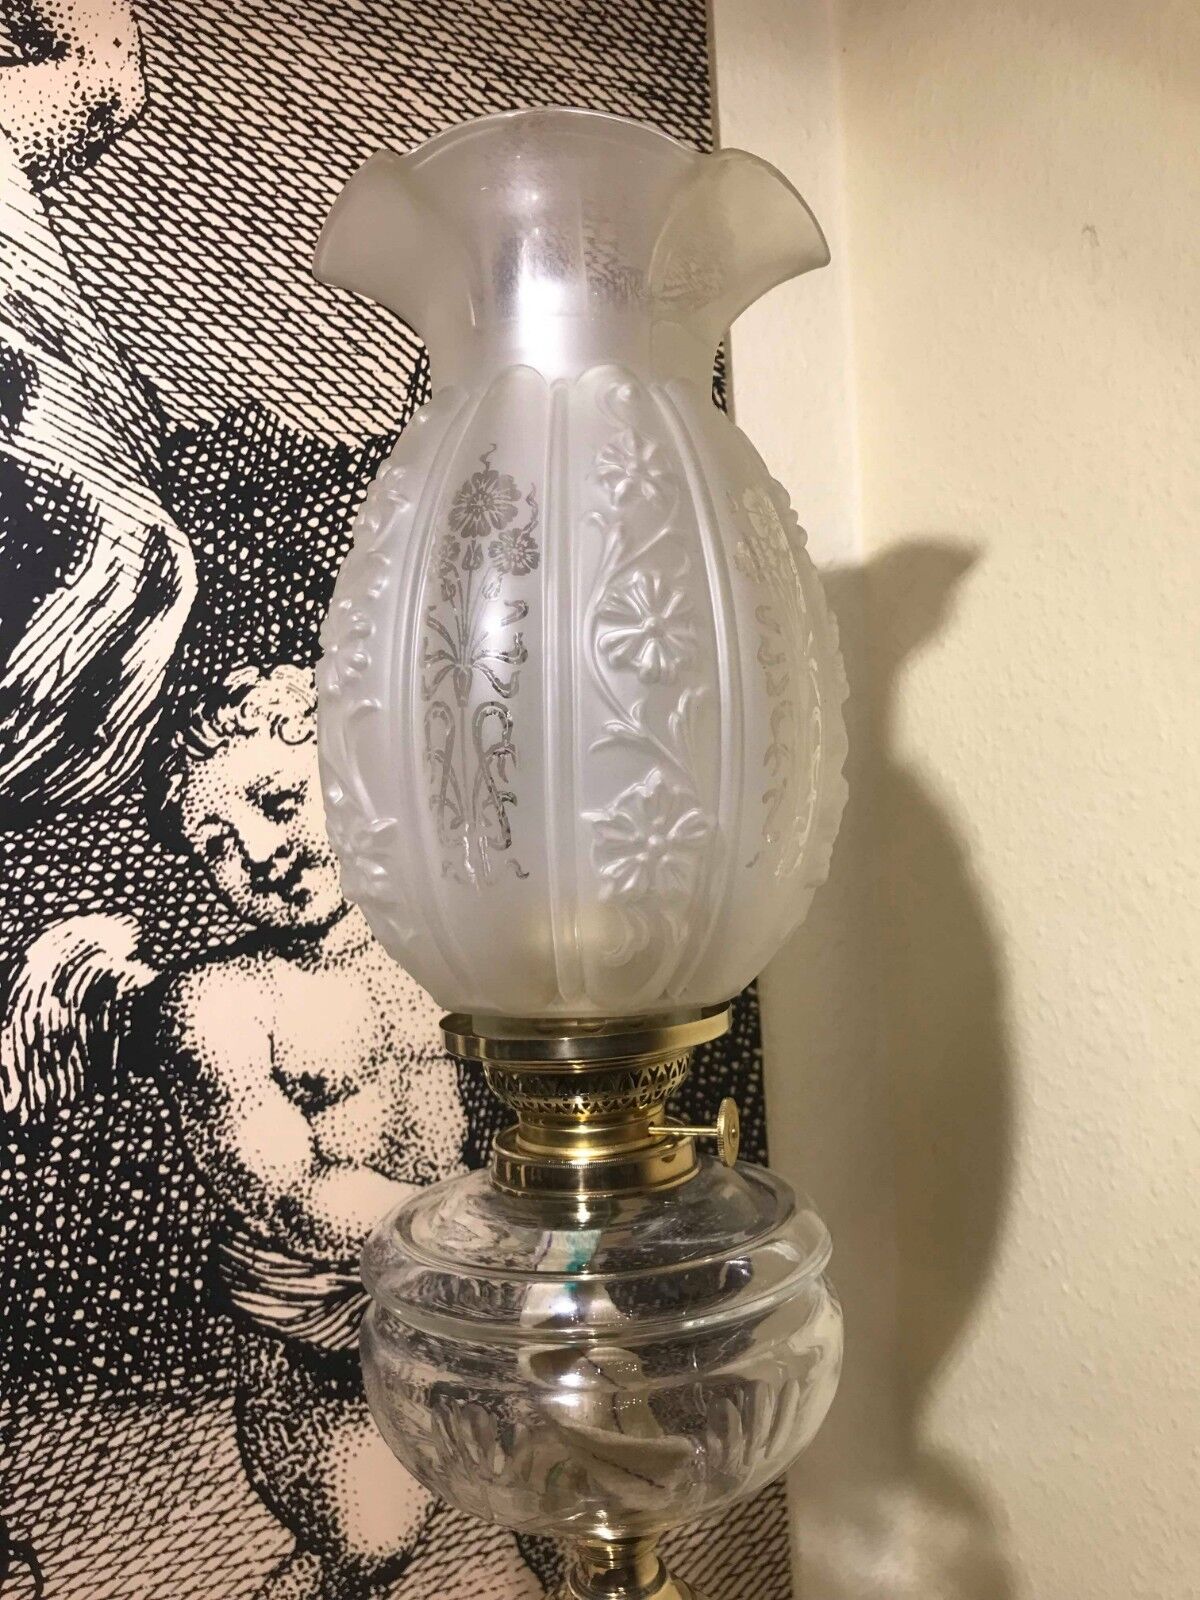 Antique Brass German Victorian Kerosene Oil Lamp